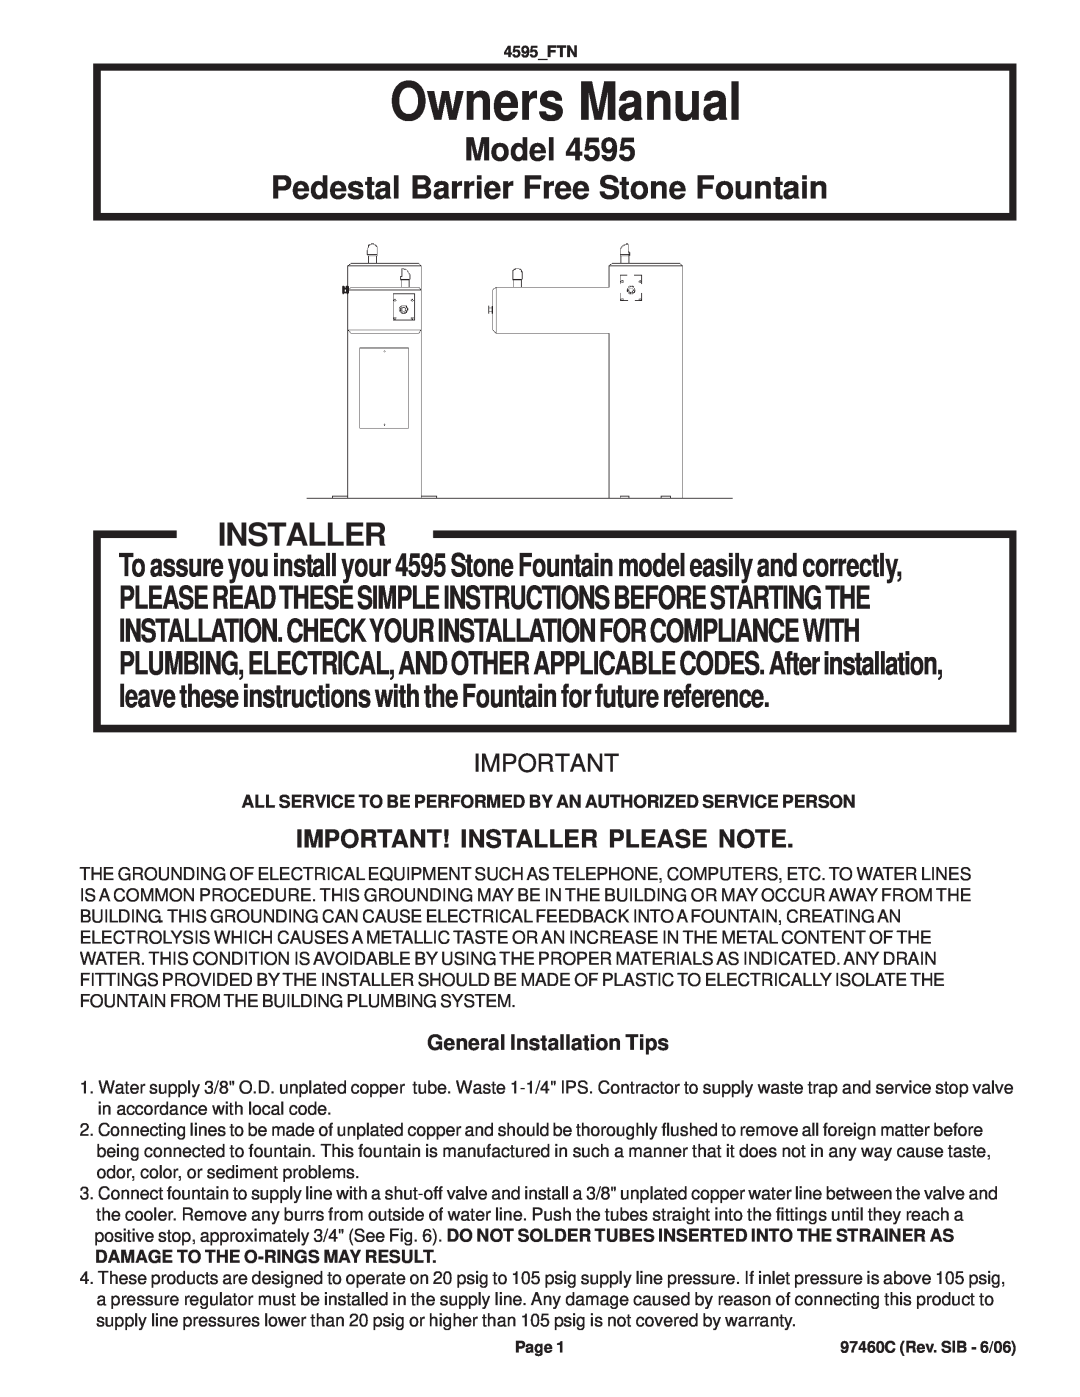 Elkay 4595 owner manual General Installation Tips, Model Pedestal Barrier Free Stone Fountain, Installer 